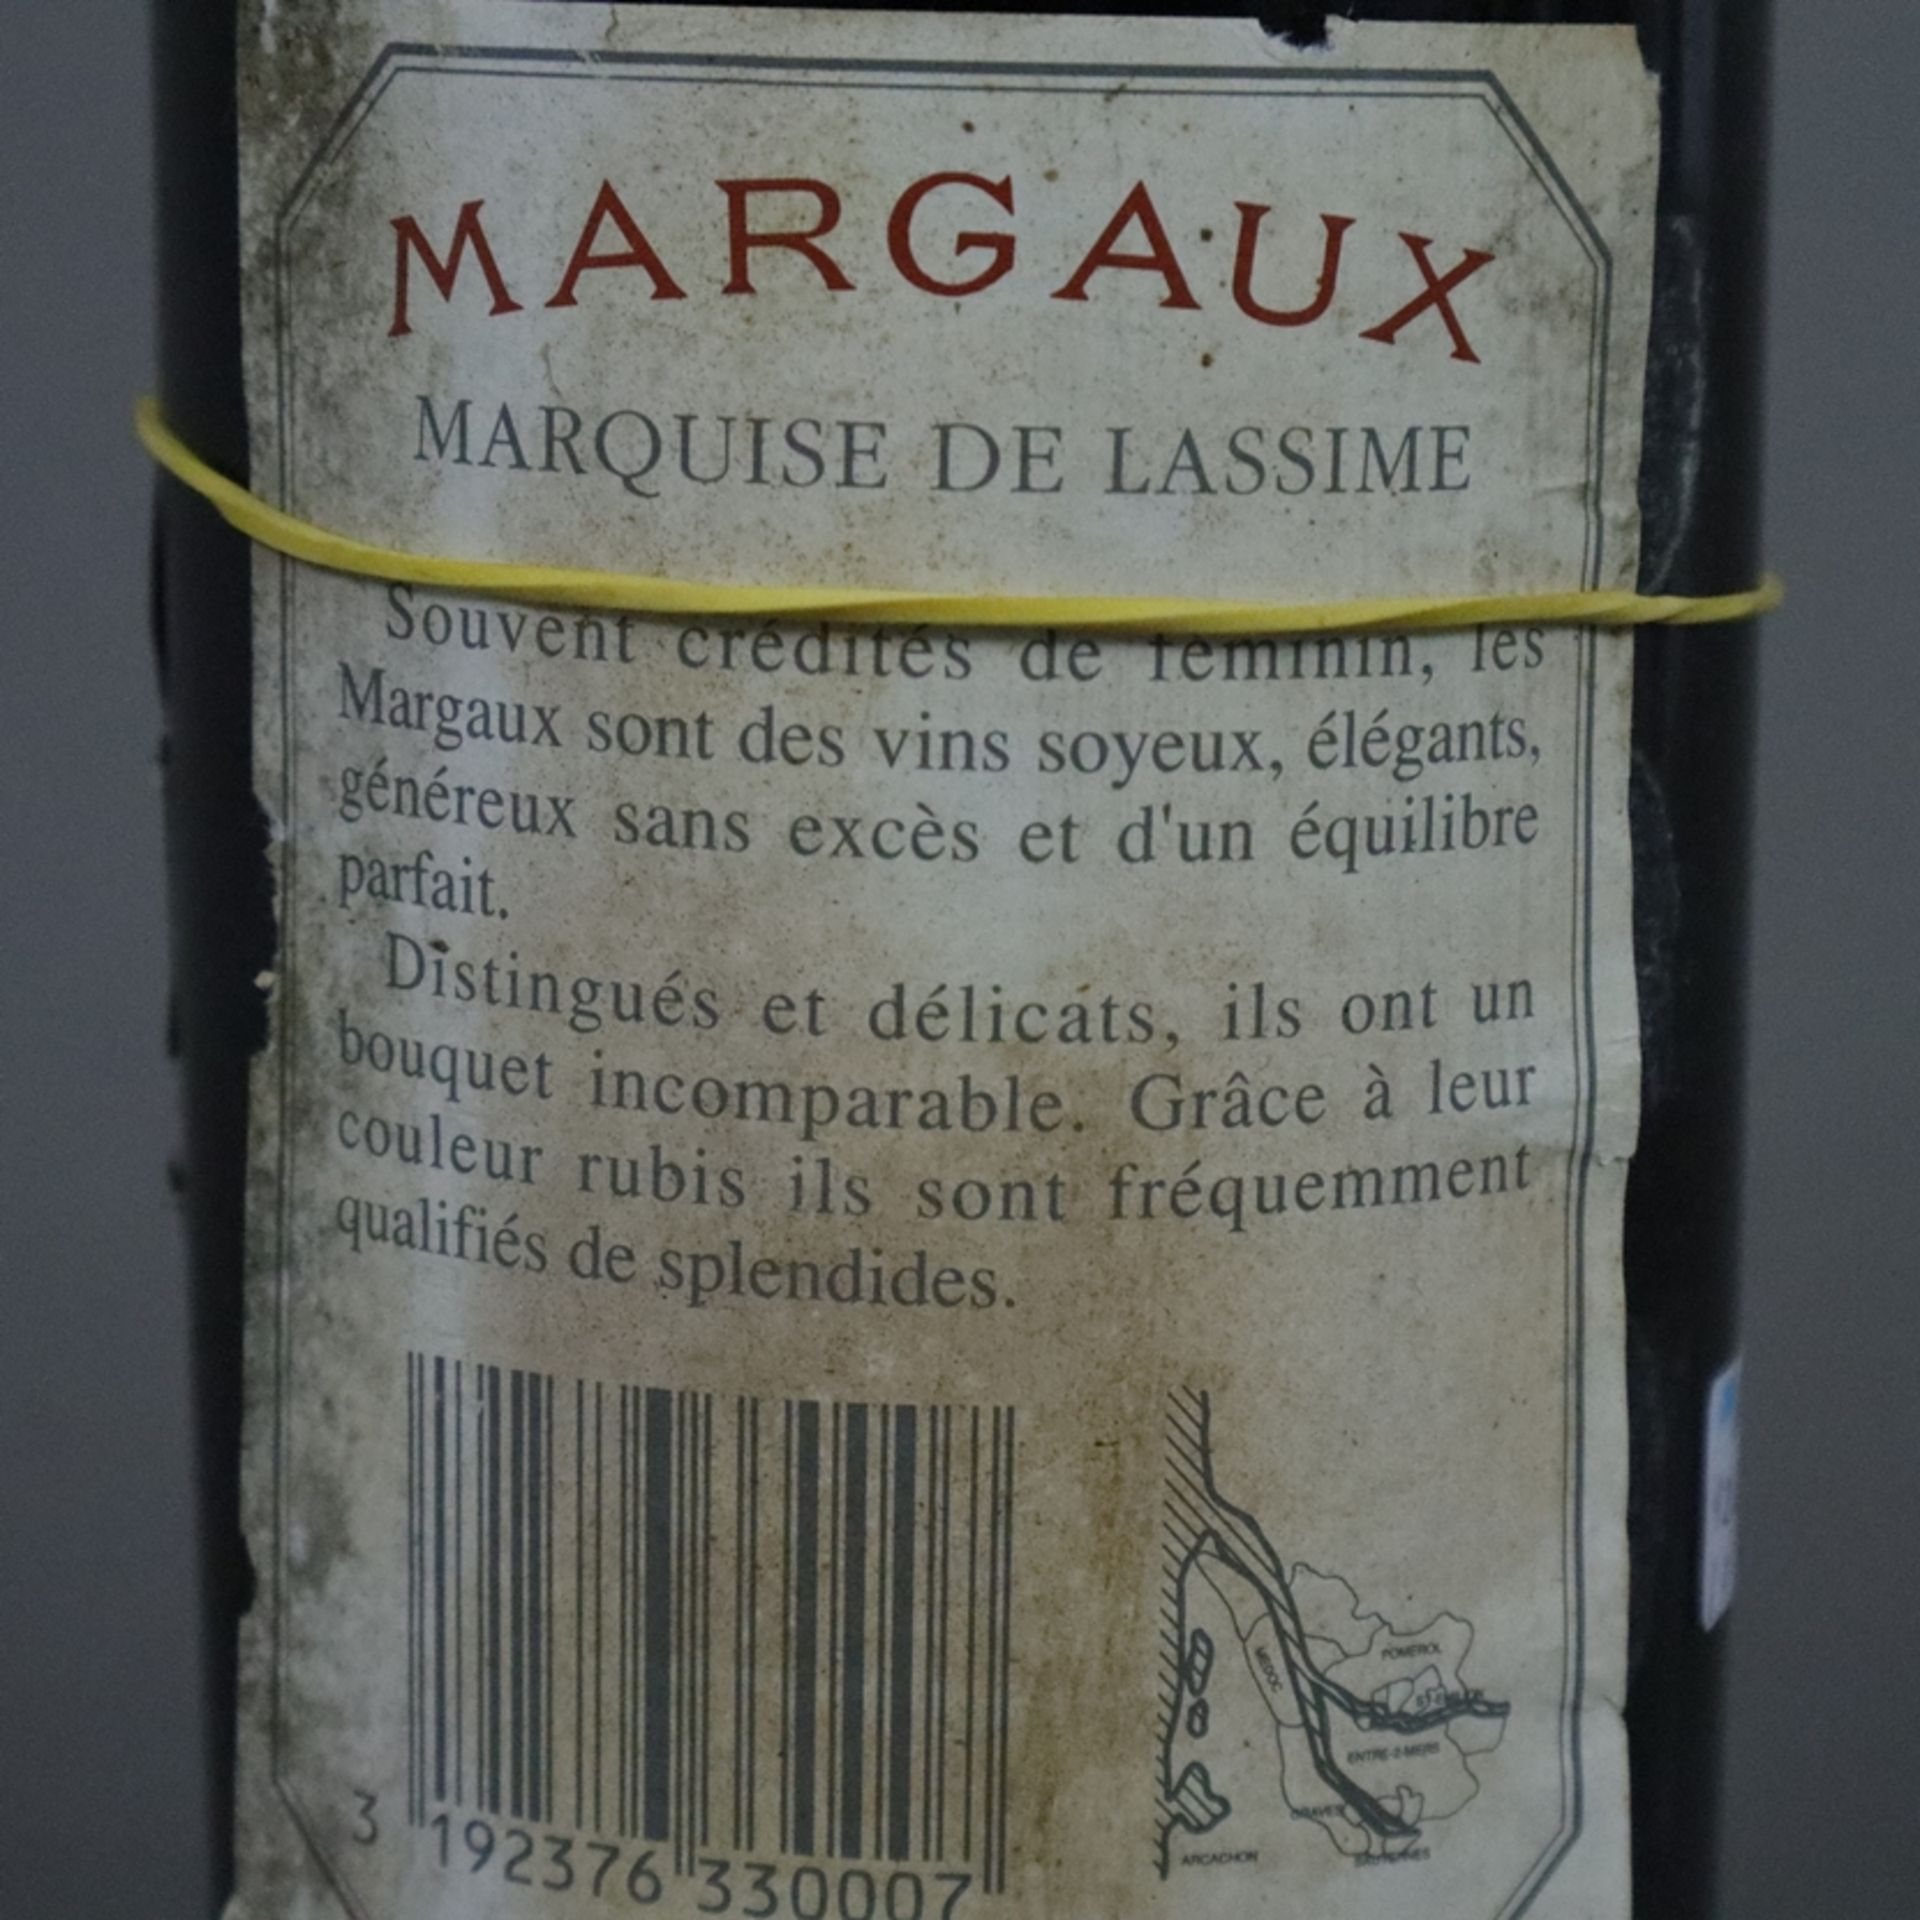 Weinkonvolut - 3 Flaschen 1987 Margaux, Marquise de Lassime, France, 75 cl, Füllstand: Top Shoulder - Bild 5 aus 7